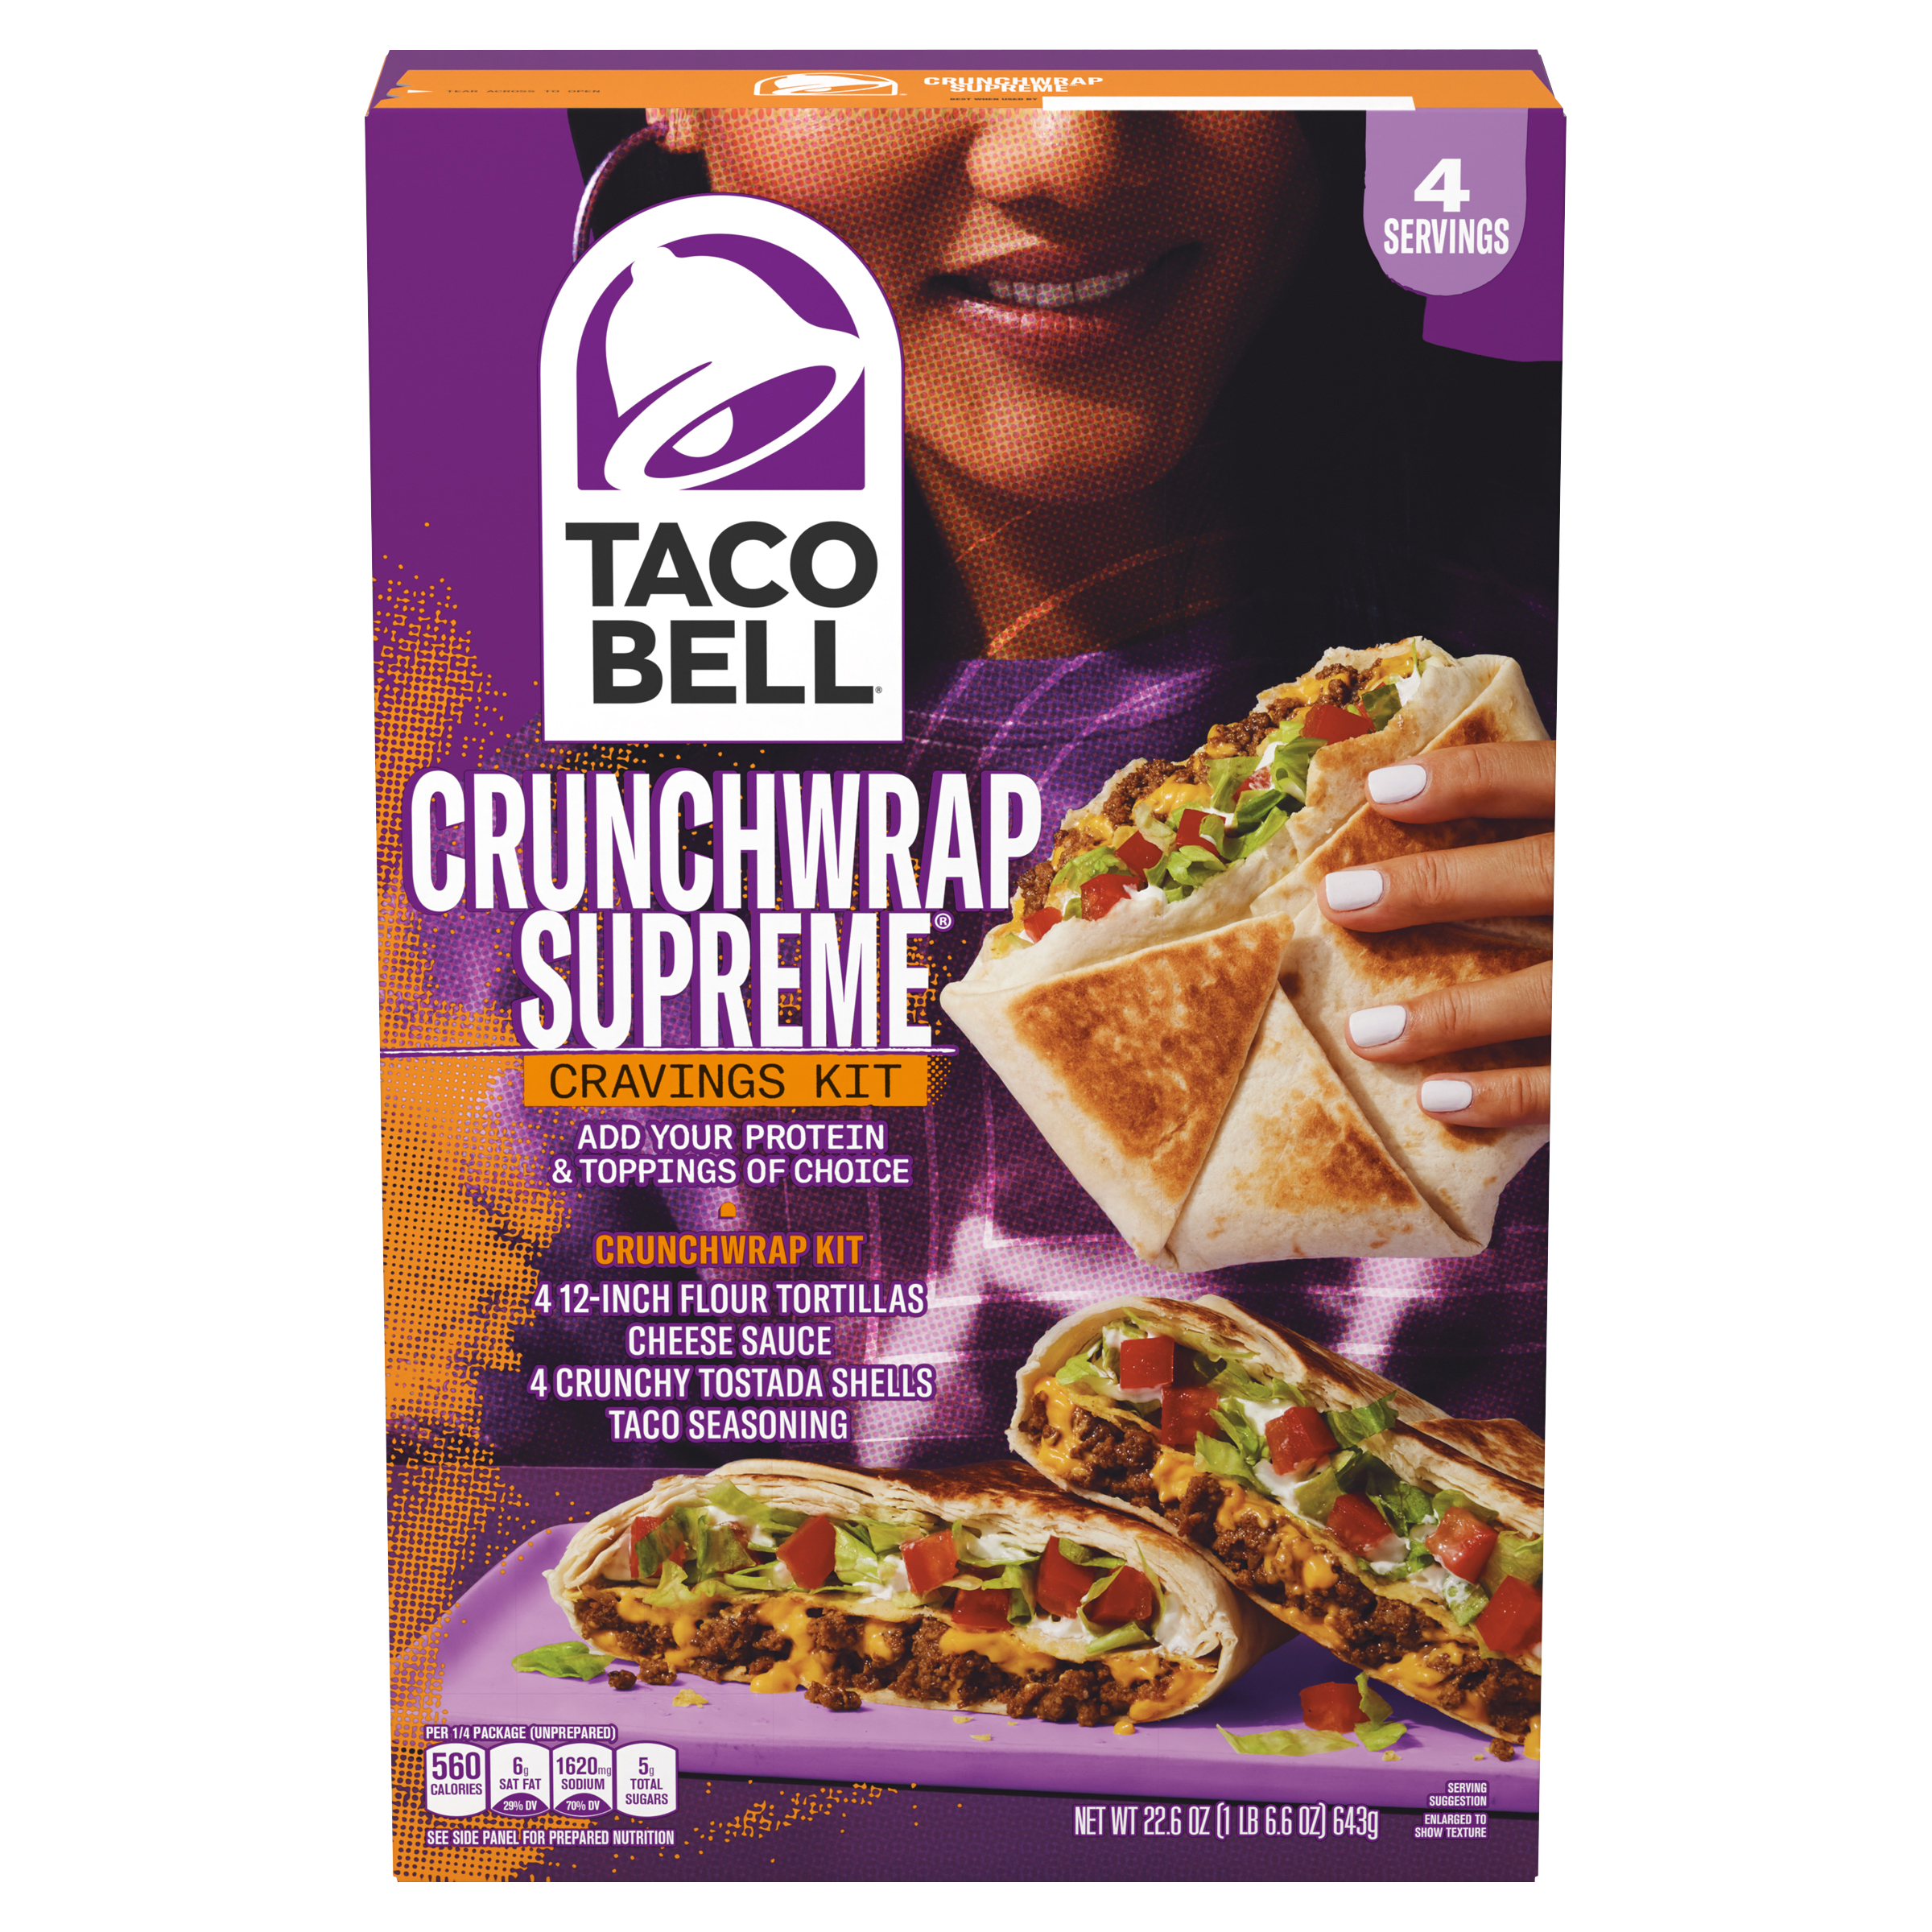 Crunchwrap Supreme Meal Kit